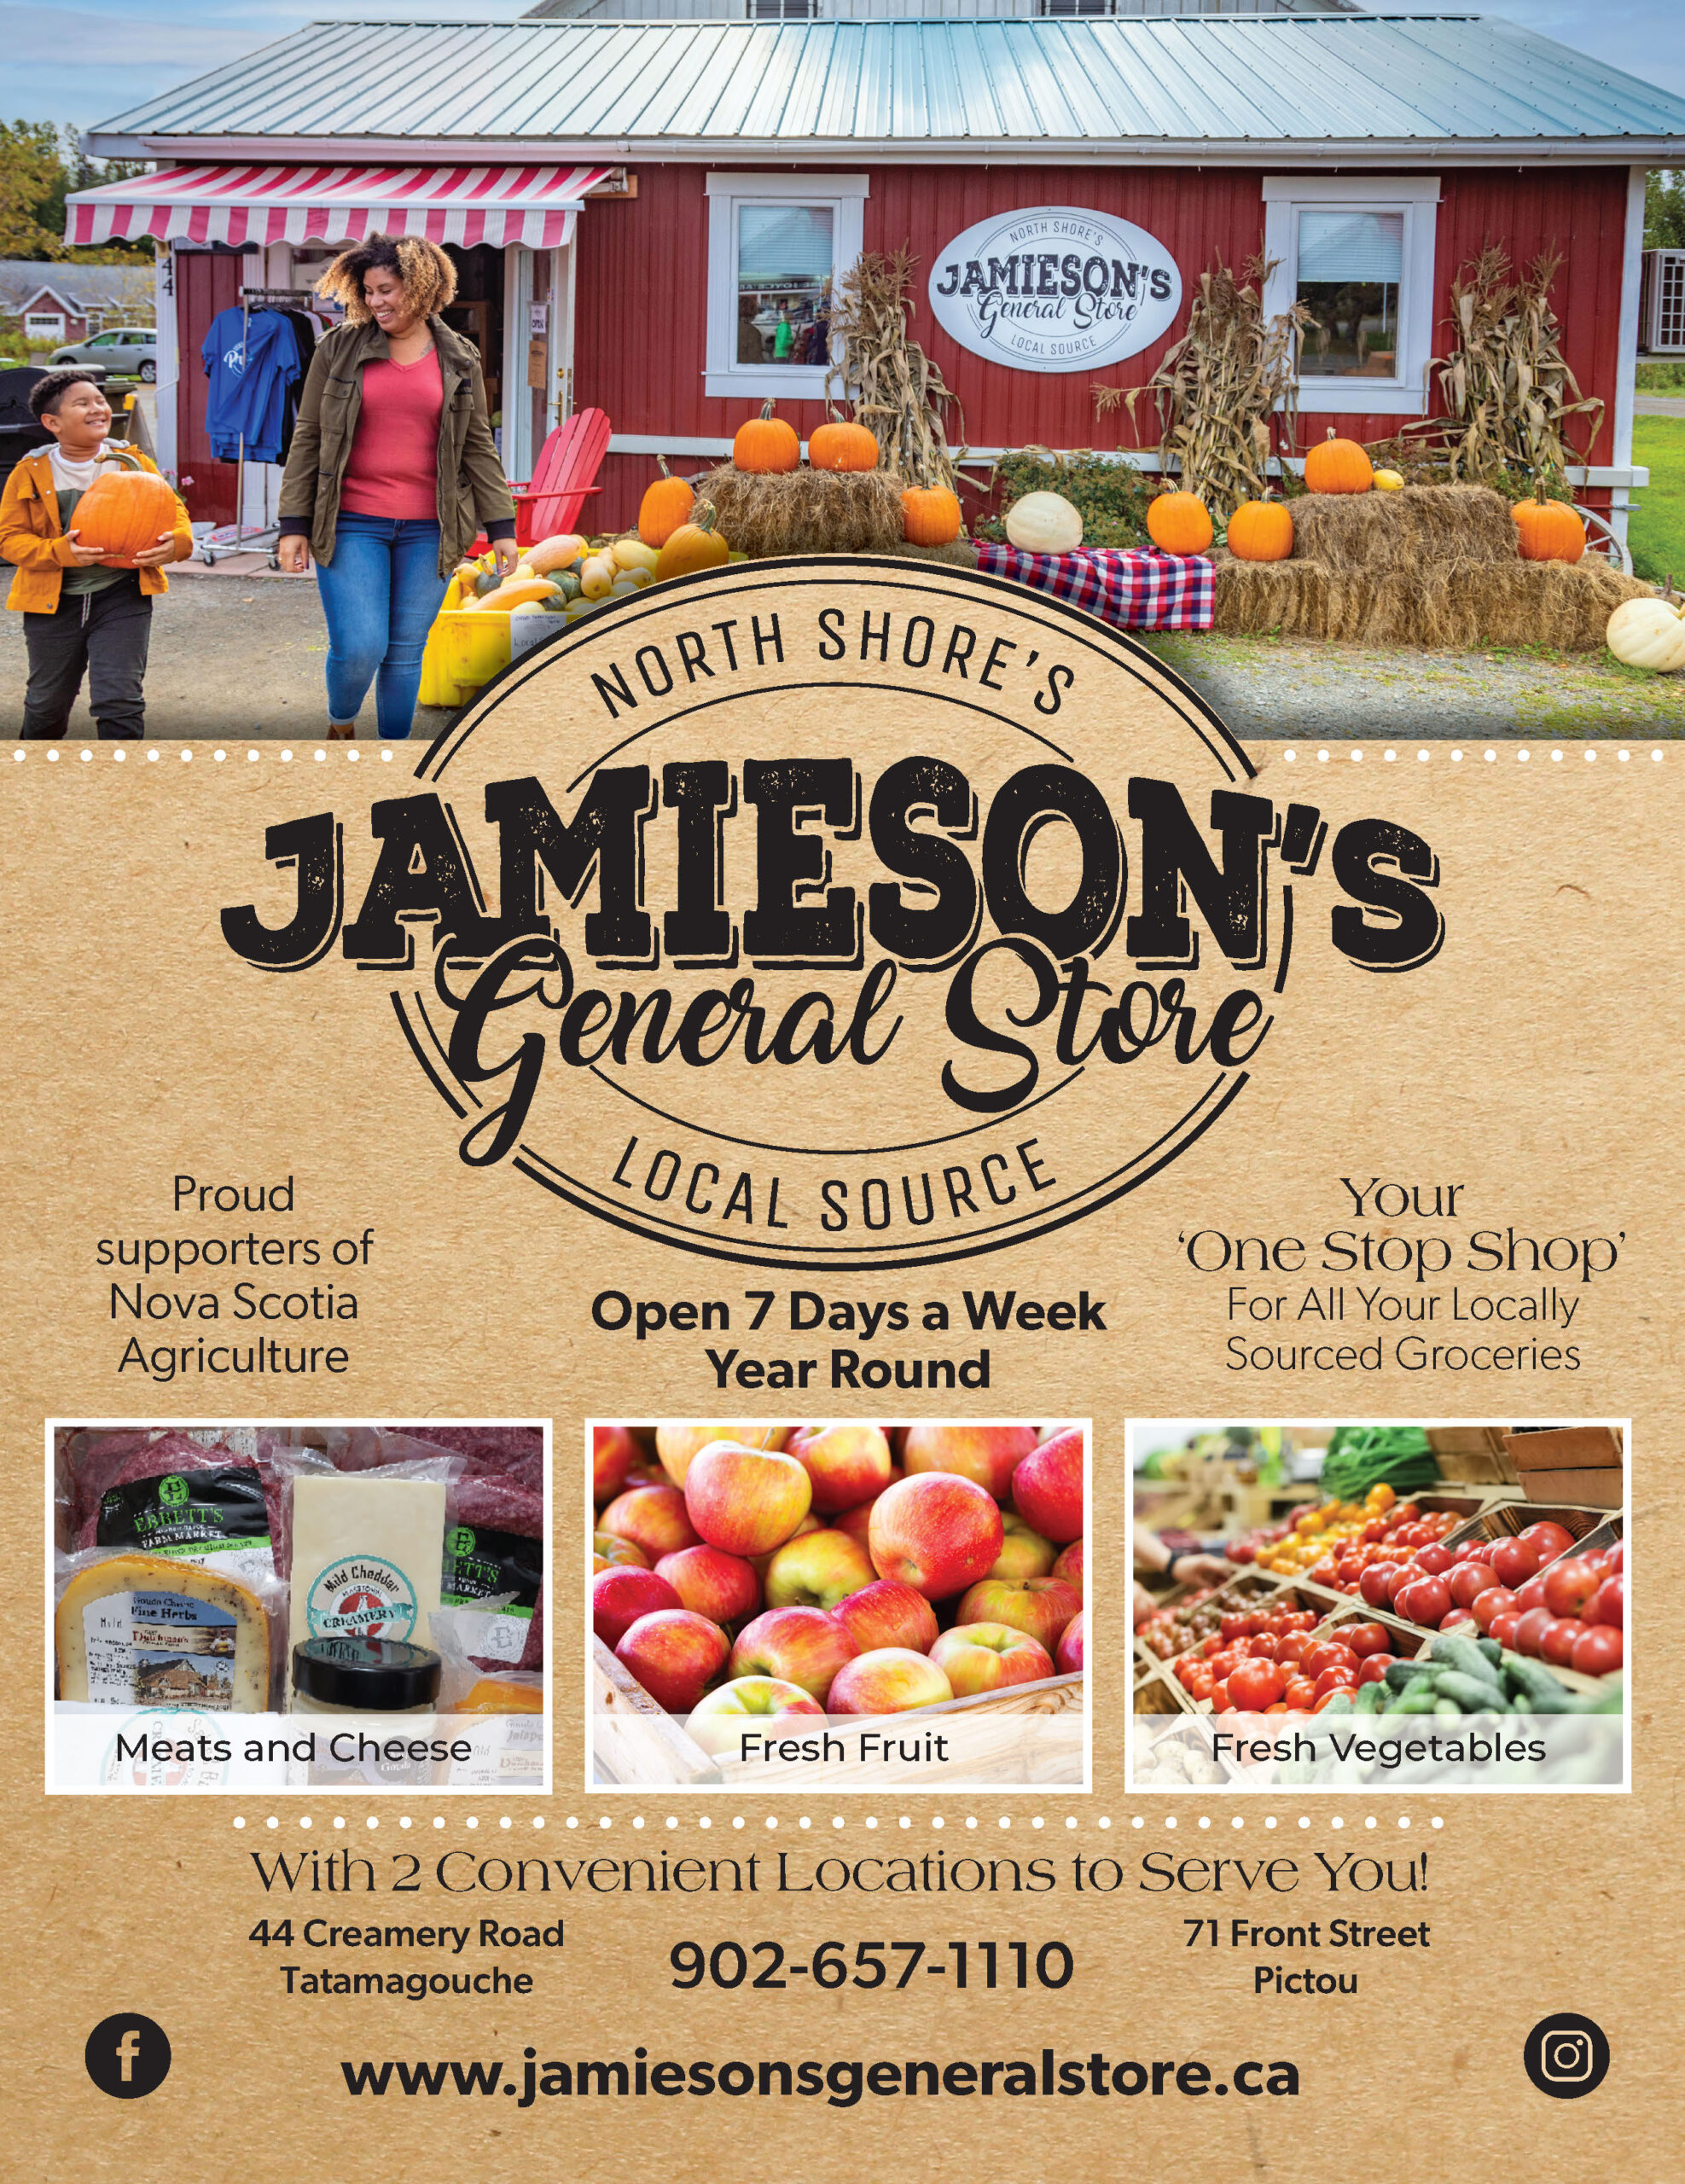 Jamieson's General Store, Pictou, Nova Scotia and Tatamagouche, Nova Scotia